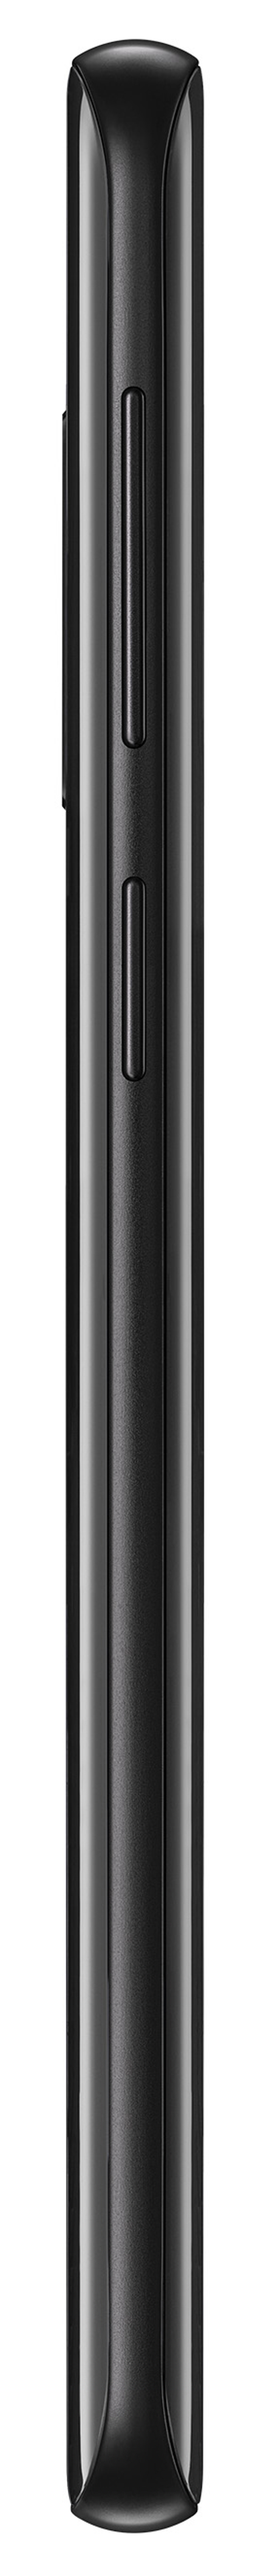 SAMSUNG GALAXY S9 BLACK Dual LTE GB 64GB HYBRID Black 64 Midnight SIM